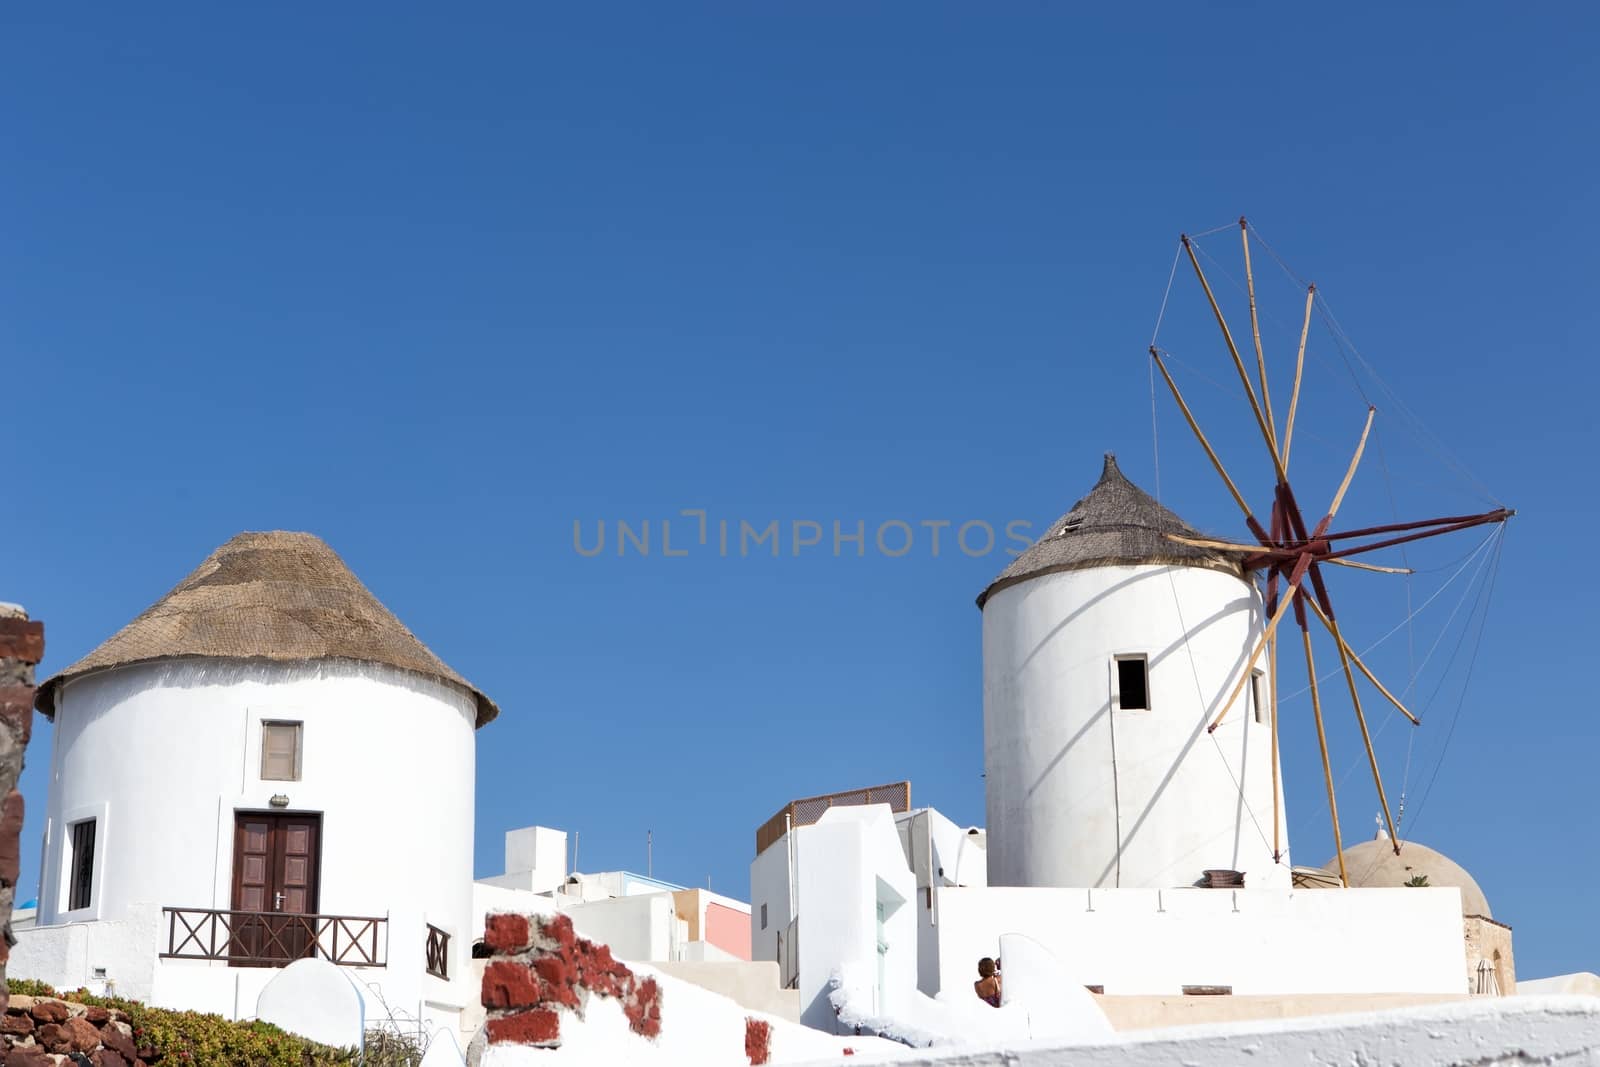 Windmill in Oia, Santorini by mitakag